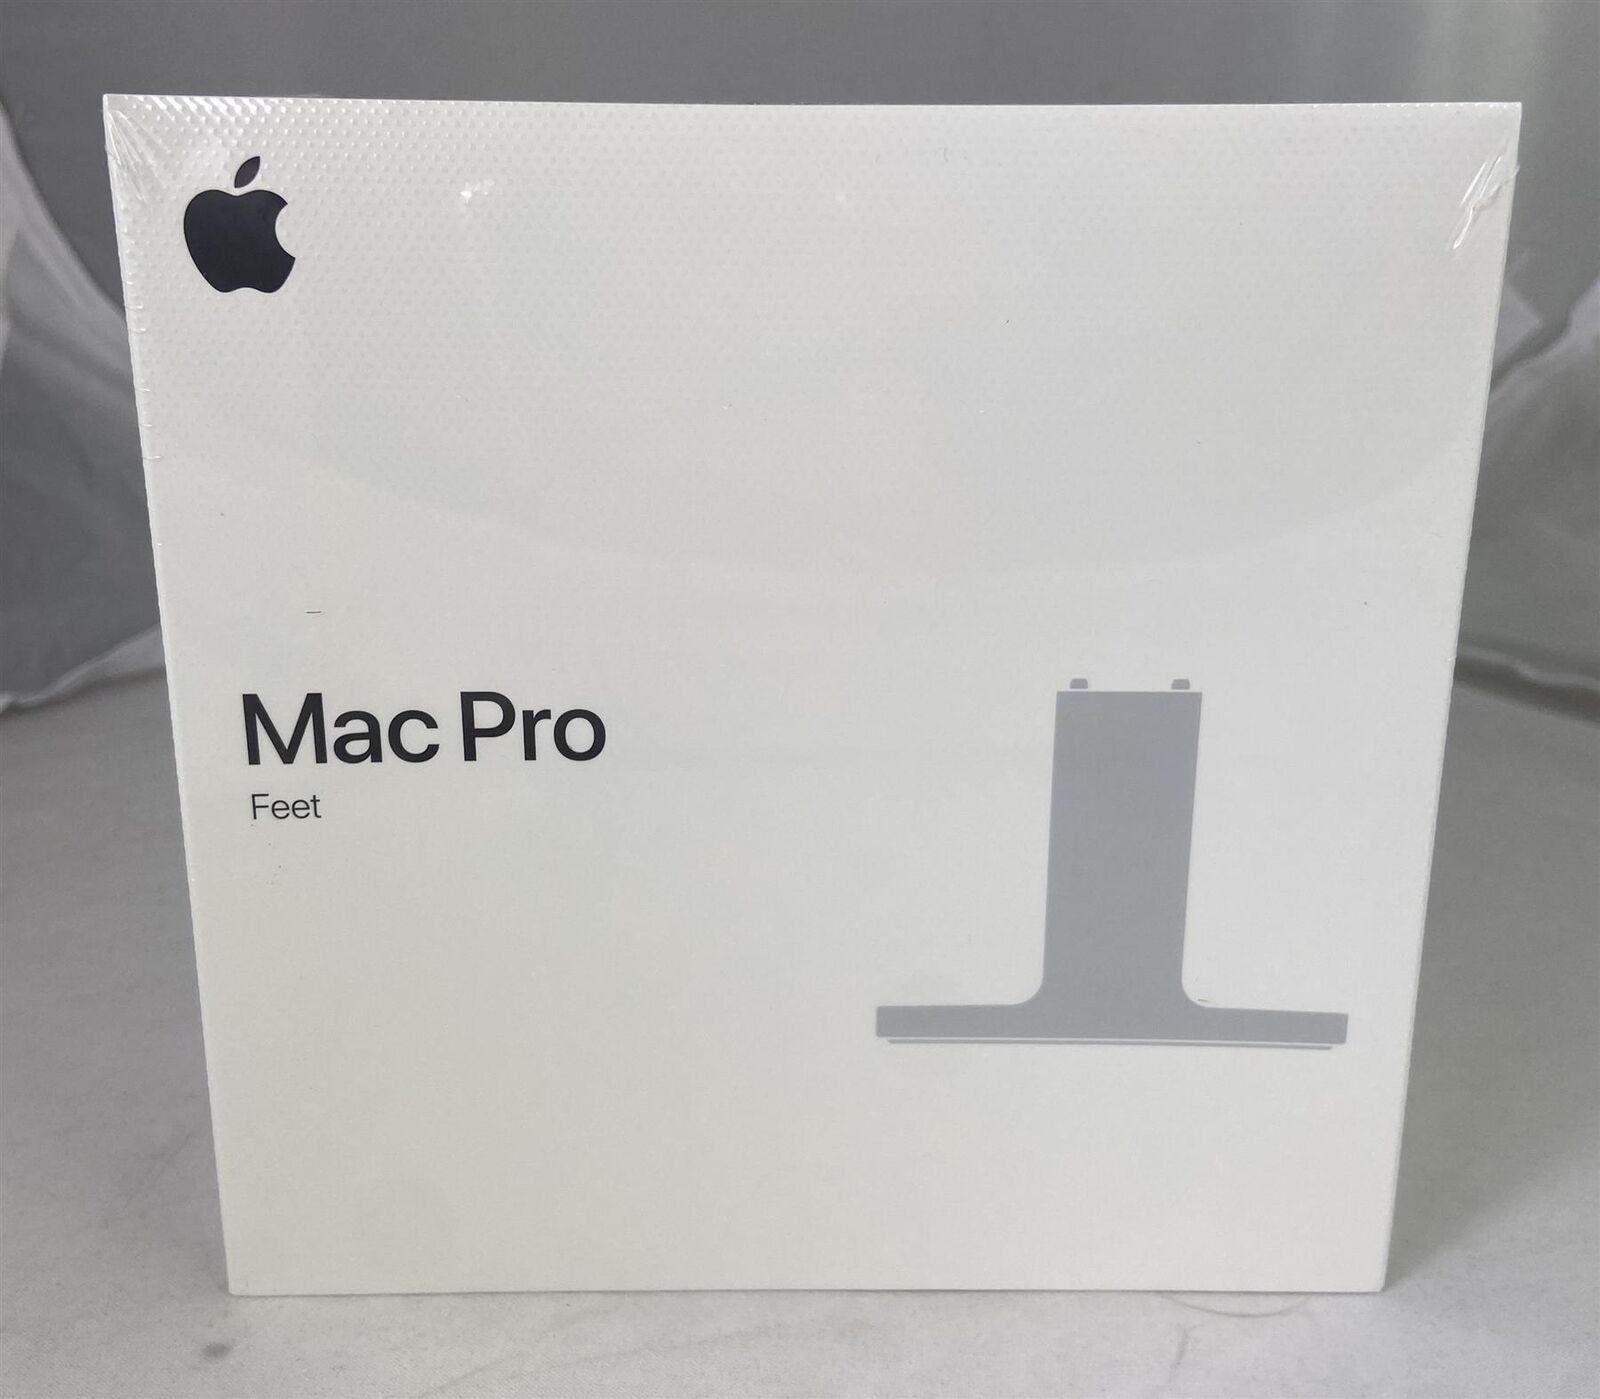 Genuine / Official Apple Mac Pro Feet Kit - New